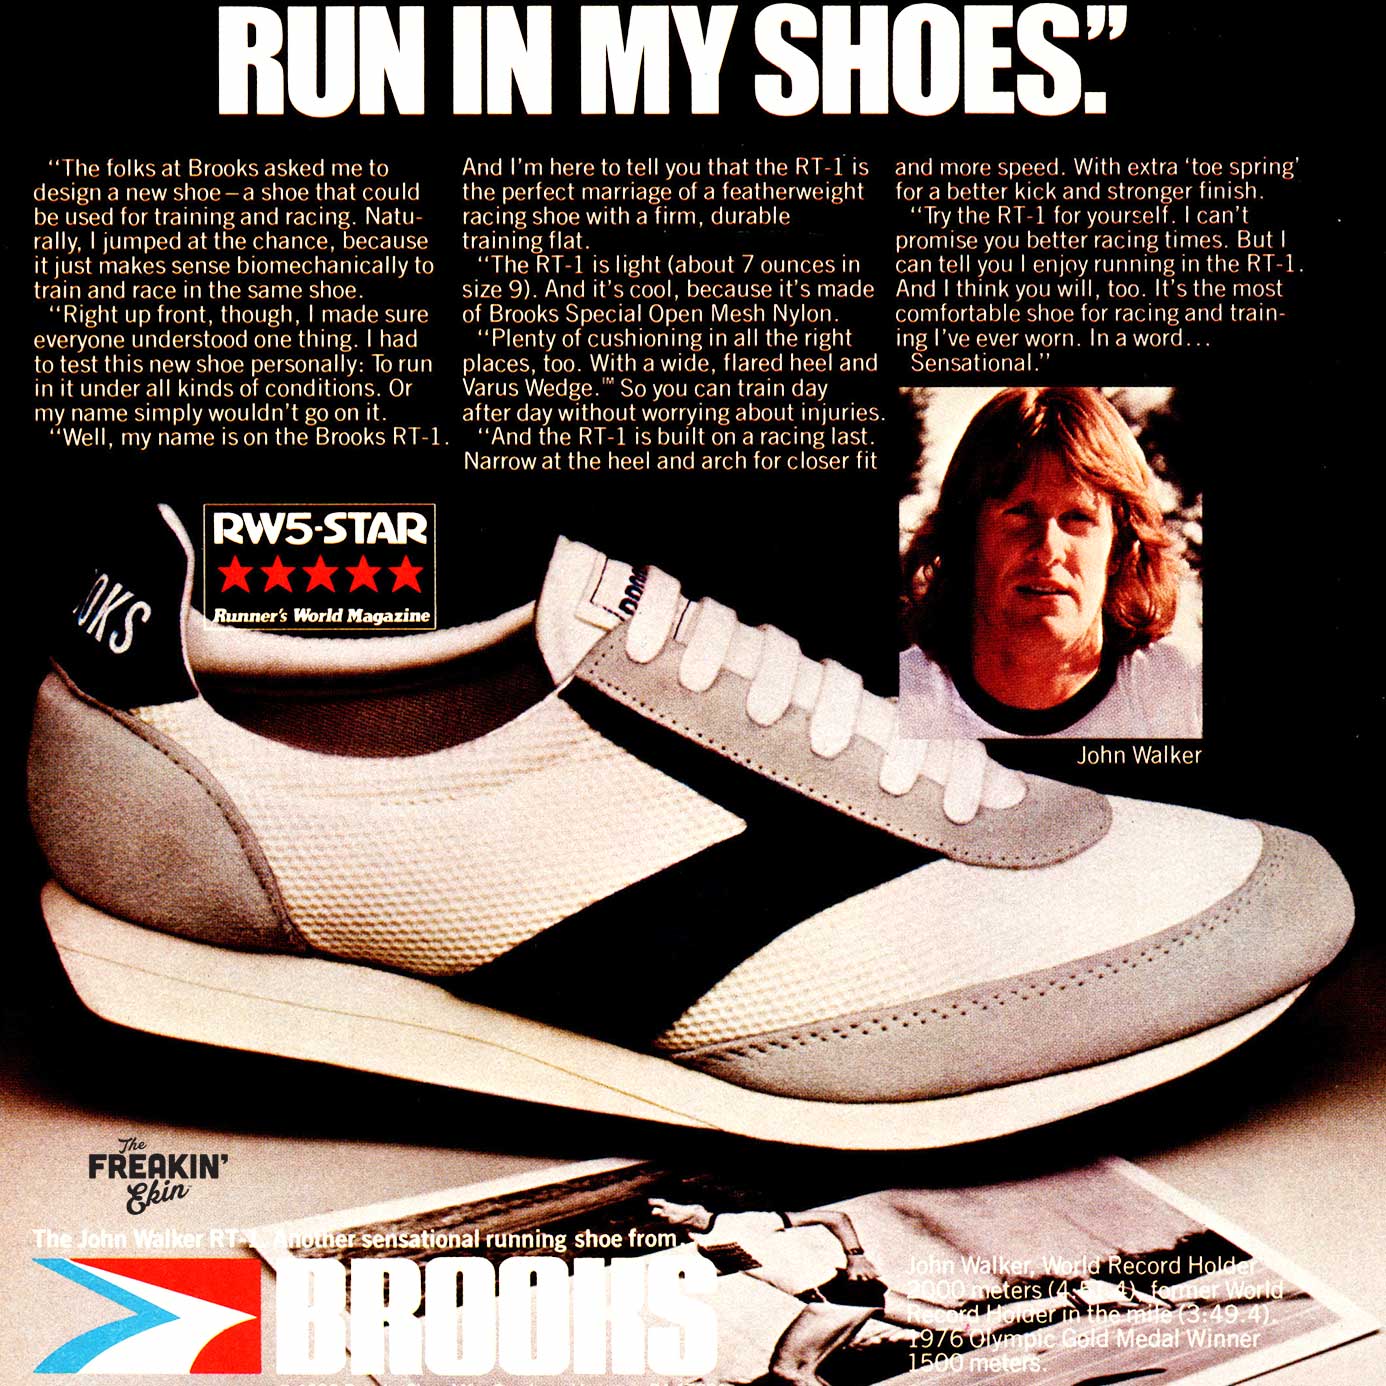 vintage sneaker ad featuring John Walker